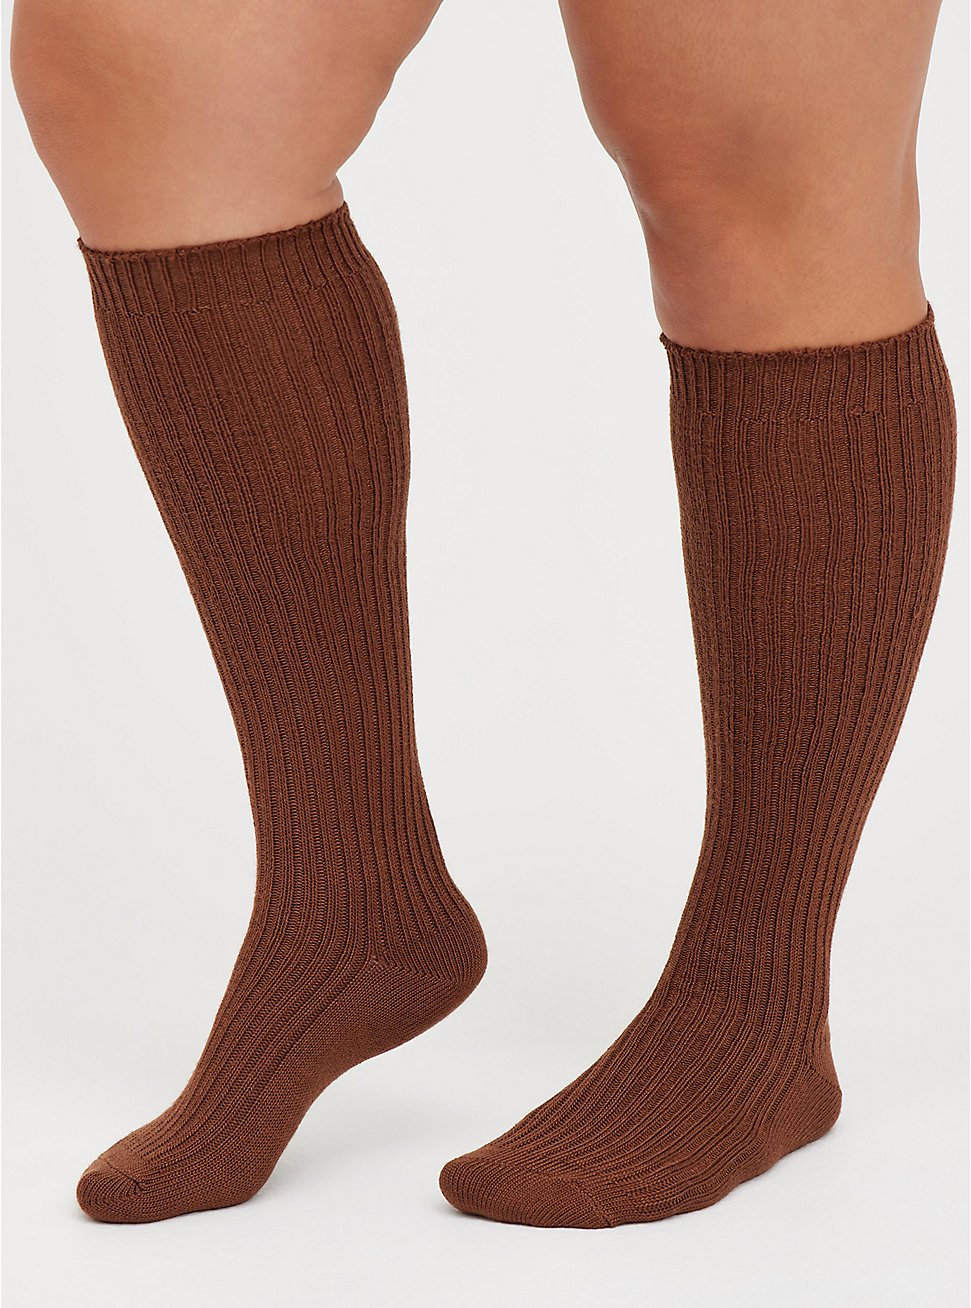 Plus Size Knee-High Socks - Butter Soft Brown , MULTI, hi-res